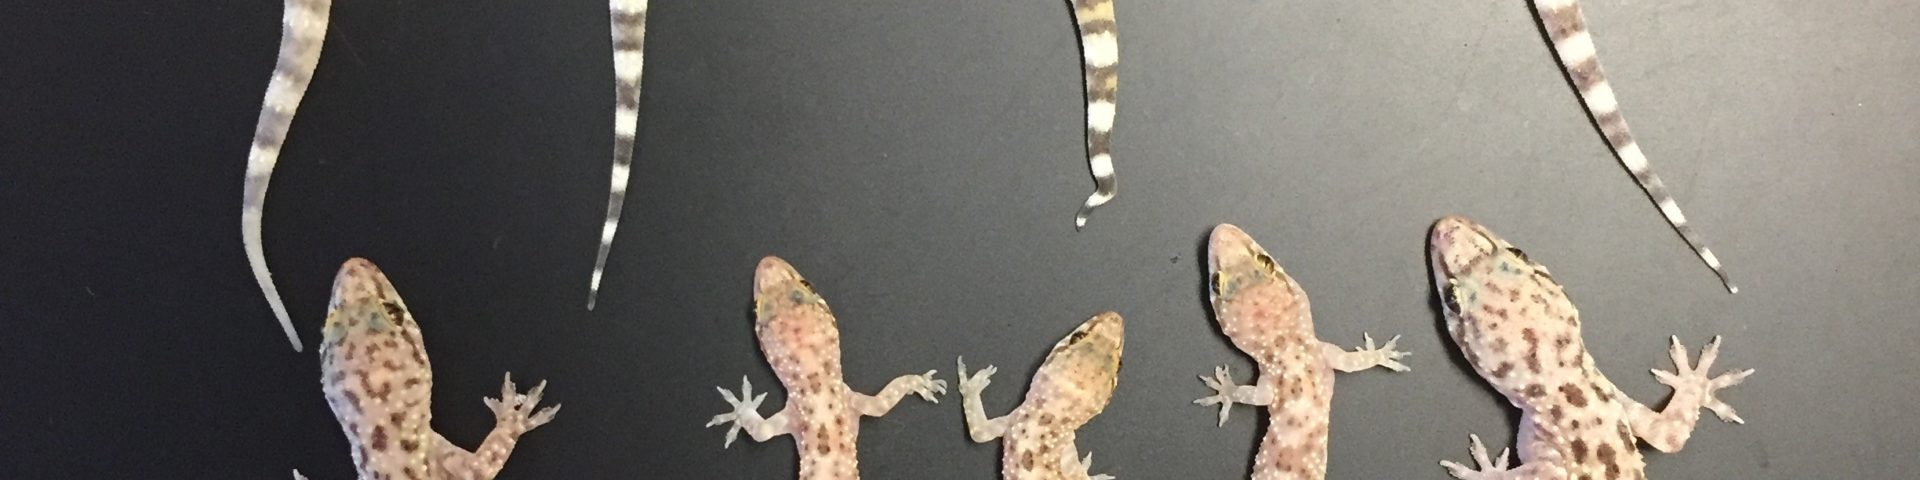 row of geckos